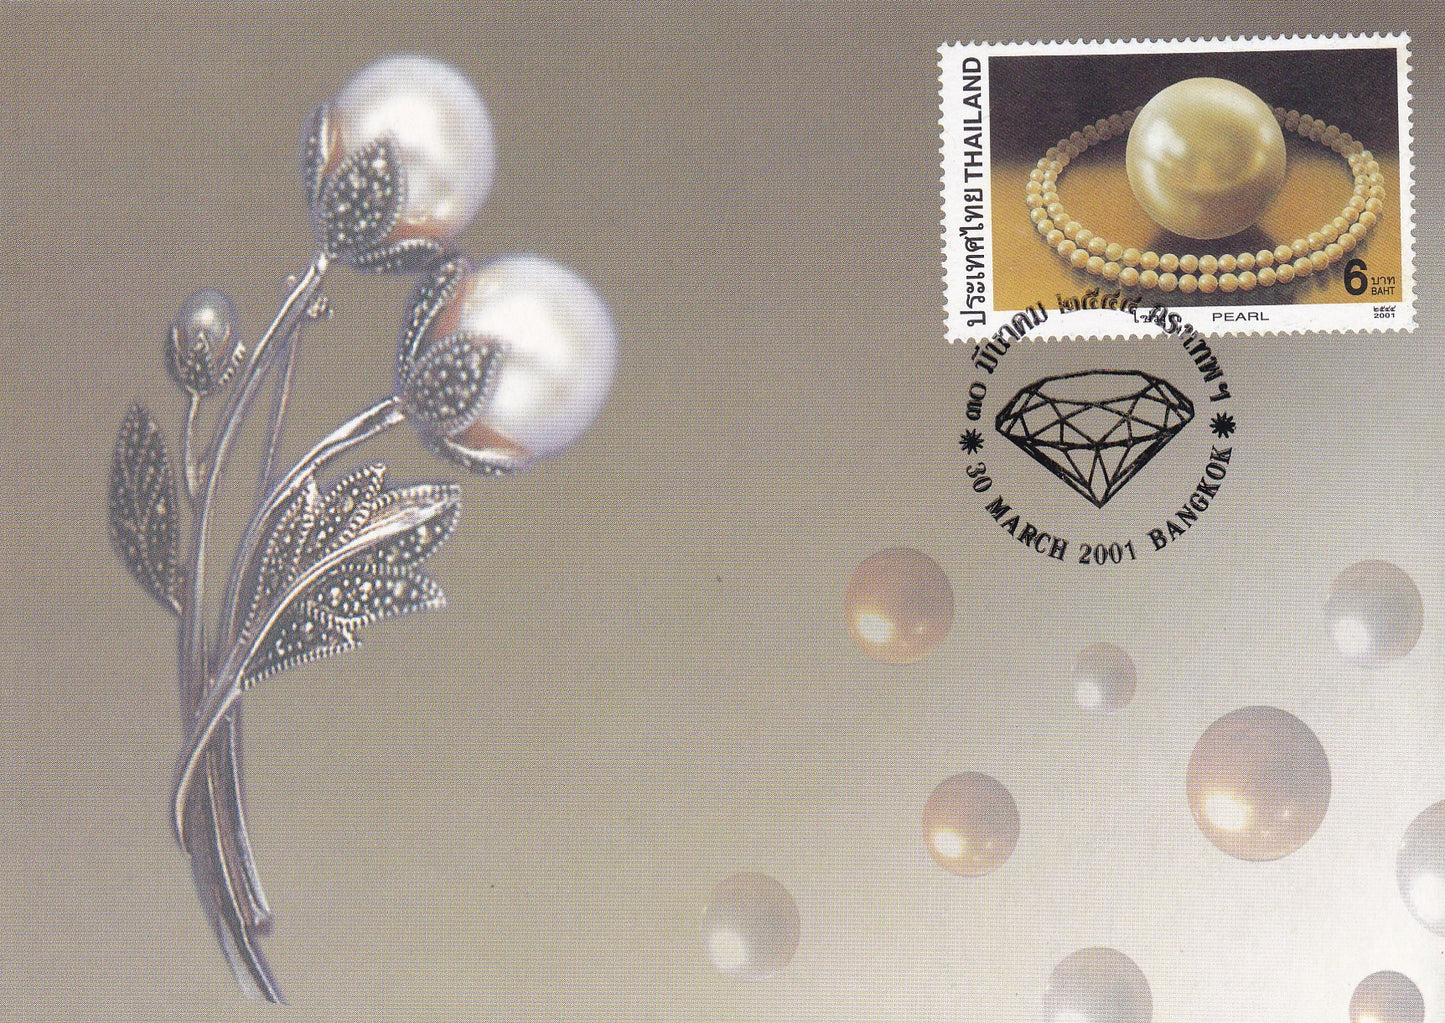 Thailand Beautiful Diamond , Pearl,Green sapphire,blue sapphire precious stones ms stamps